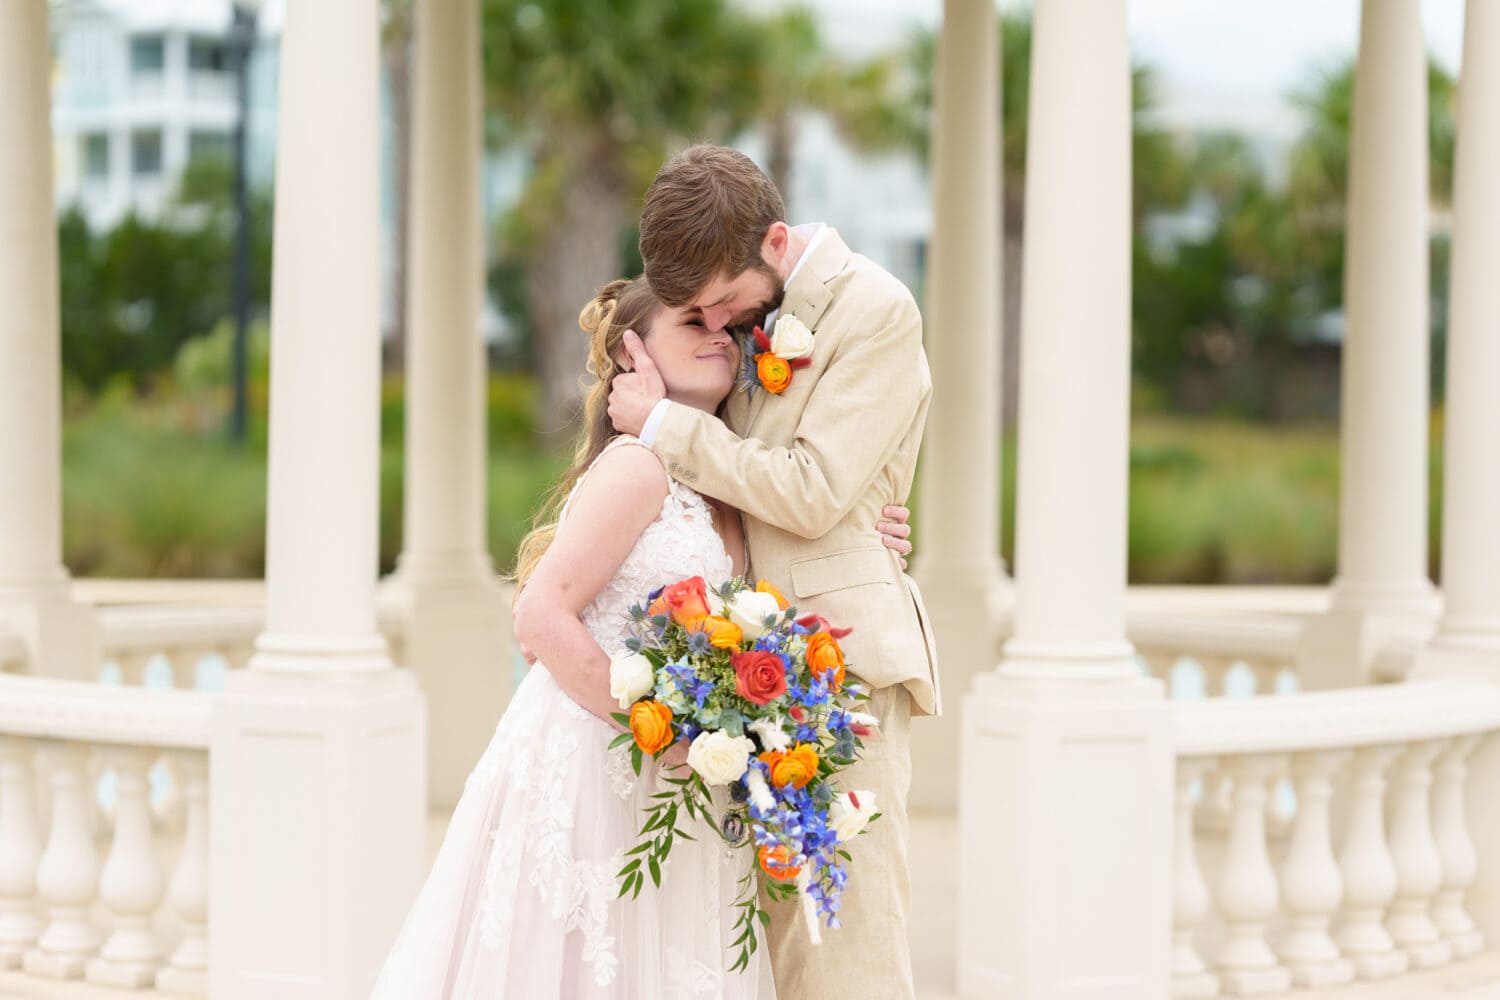 Big hug from groom - 21 Main Events - North Myrtle Beach